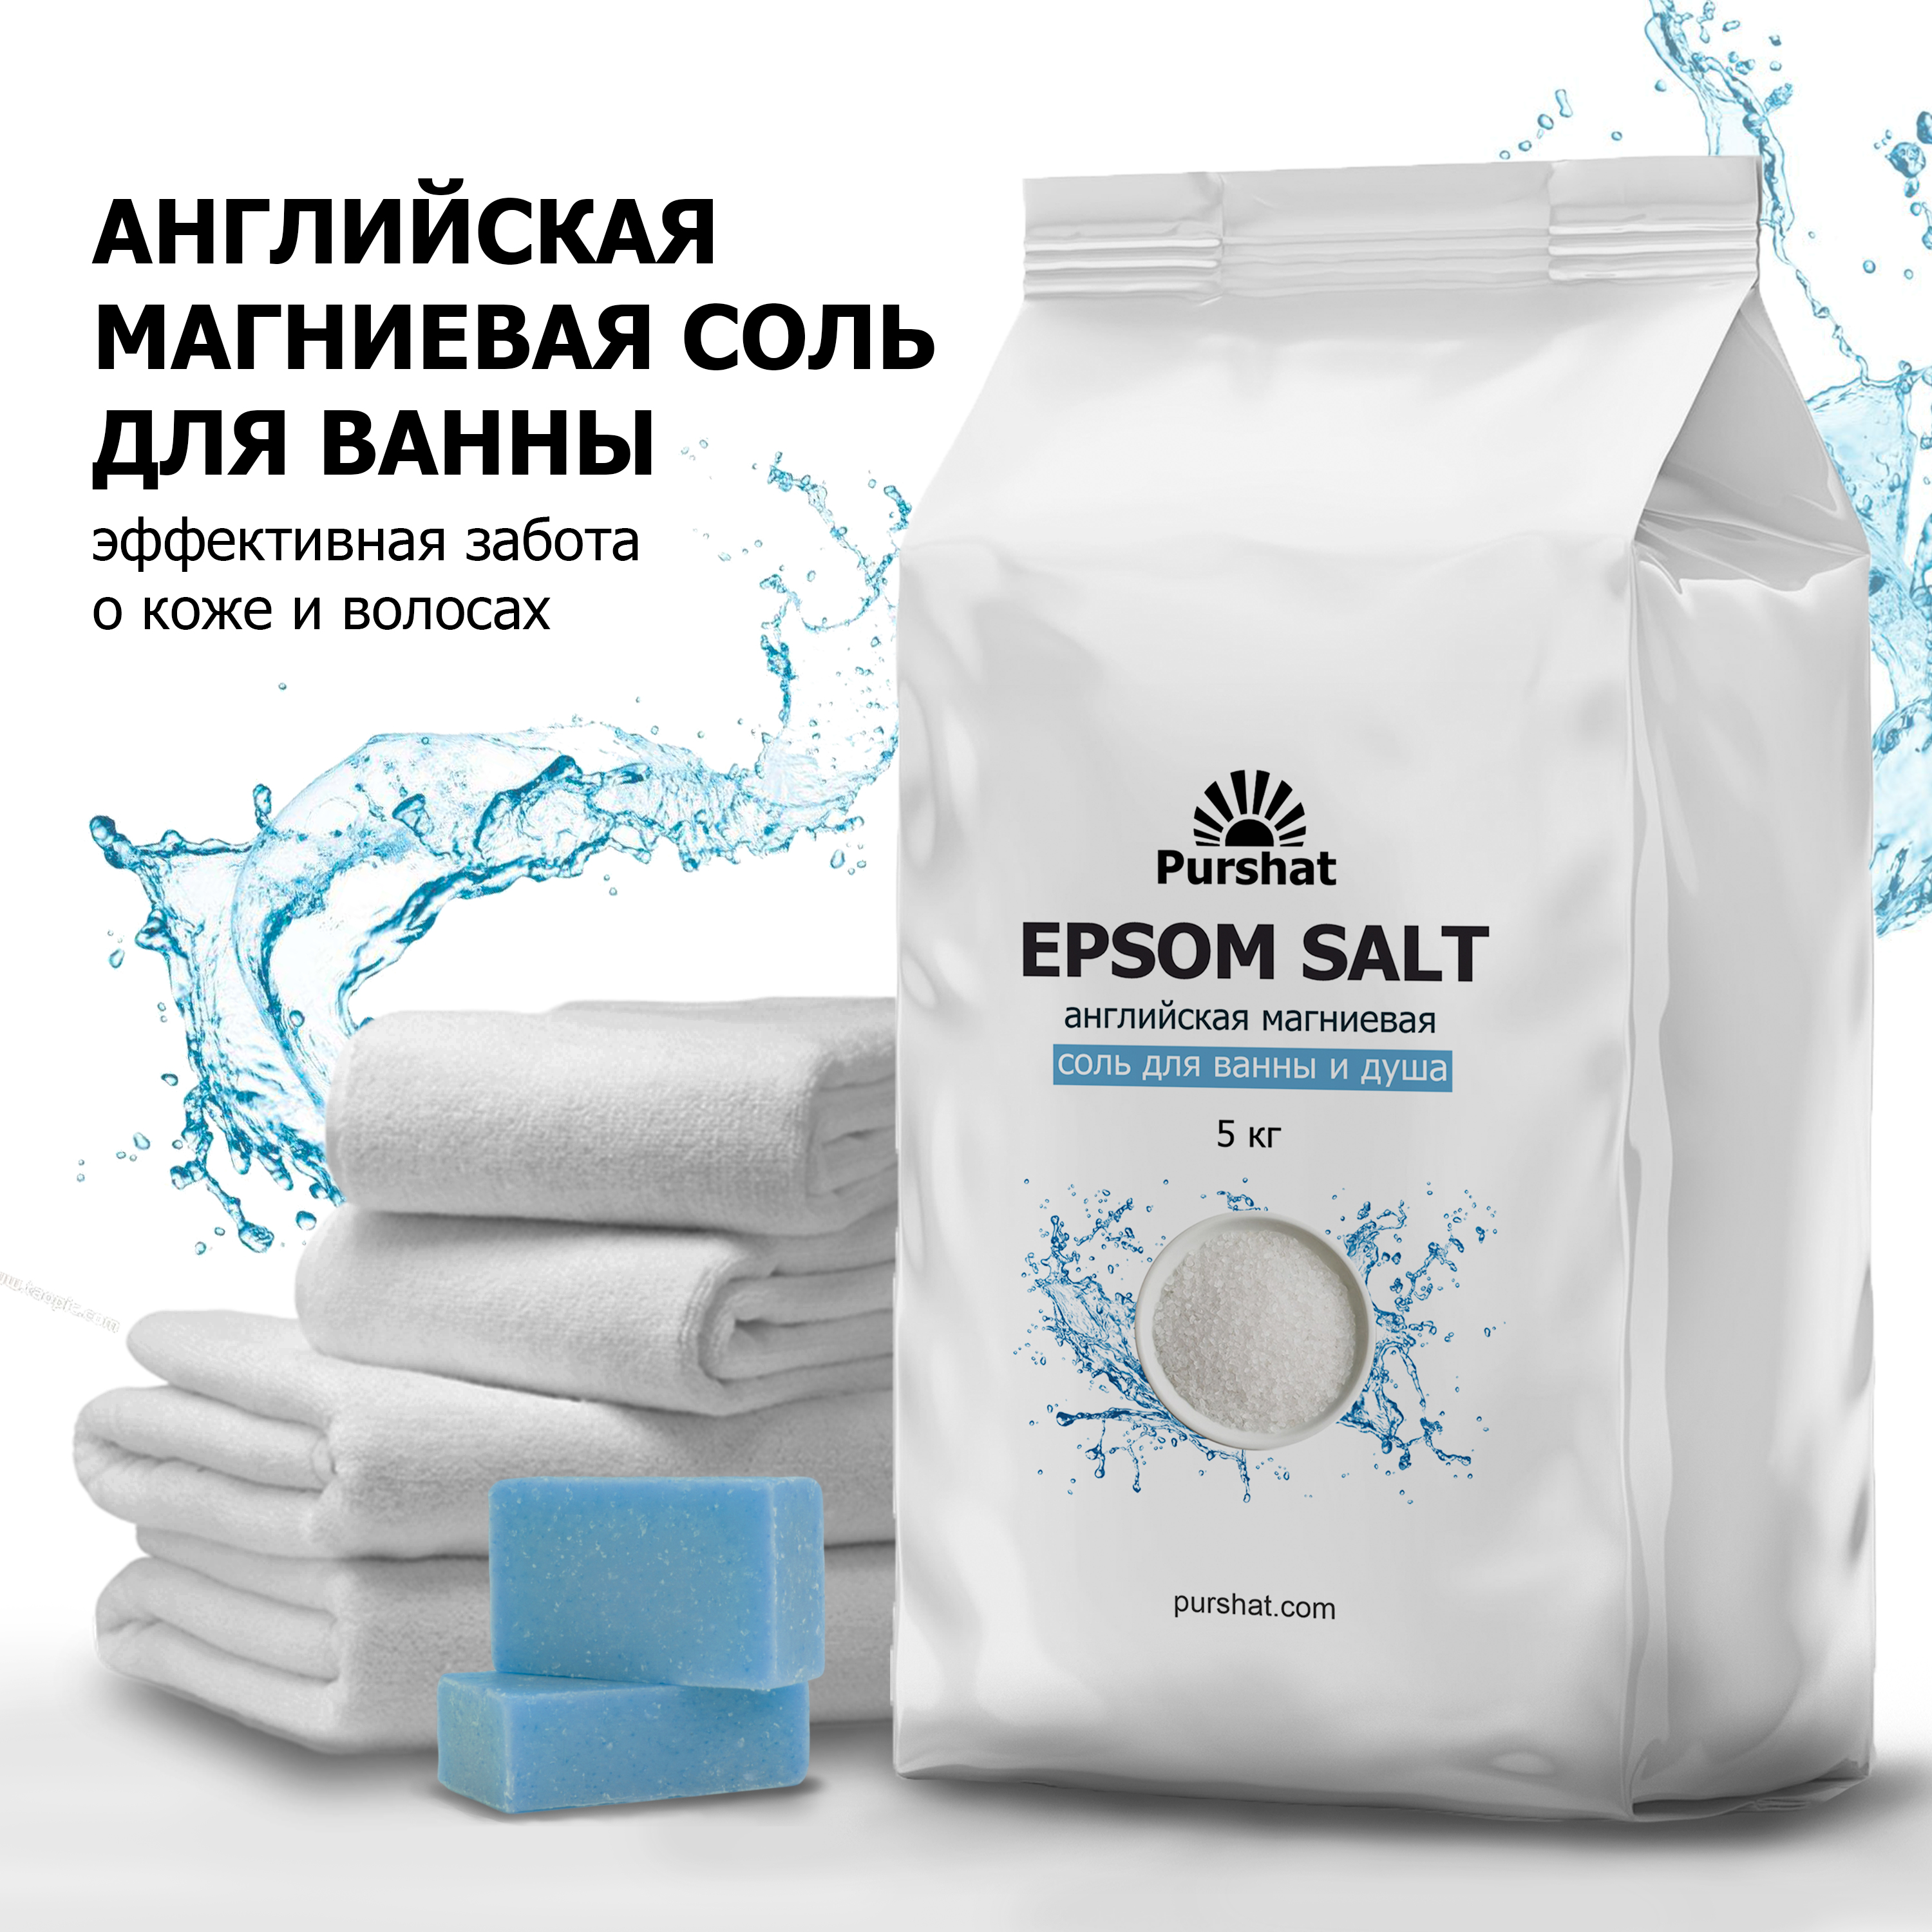 Английская магниевая соль для ванны Purshat Epsom 5 кг фермент порошок соль для ванны пантовые ванны дары арктики 40